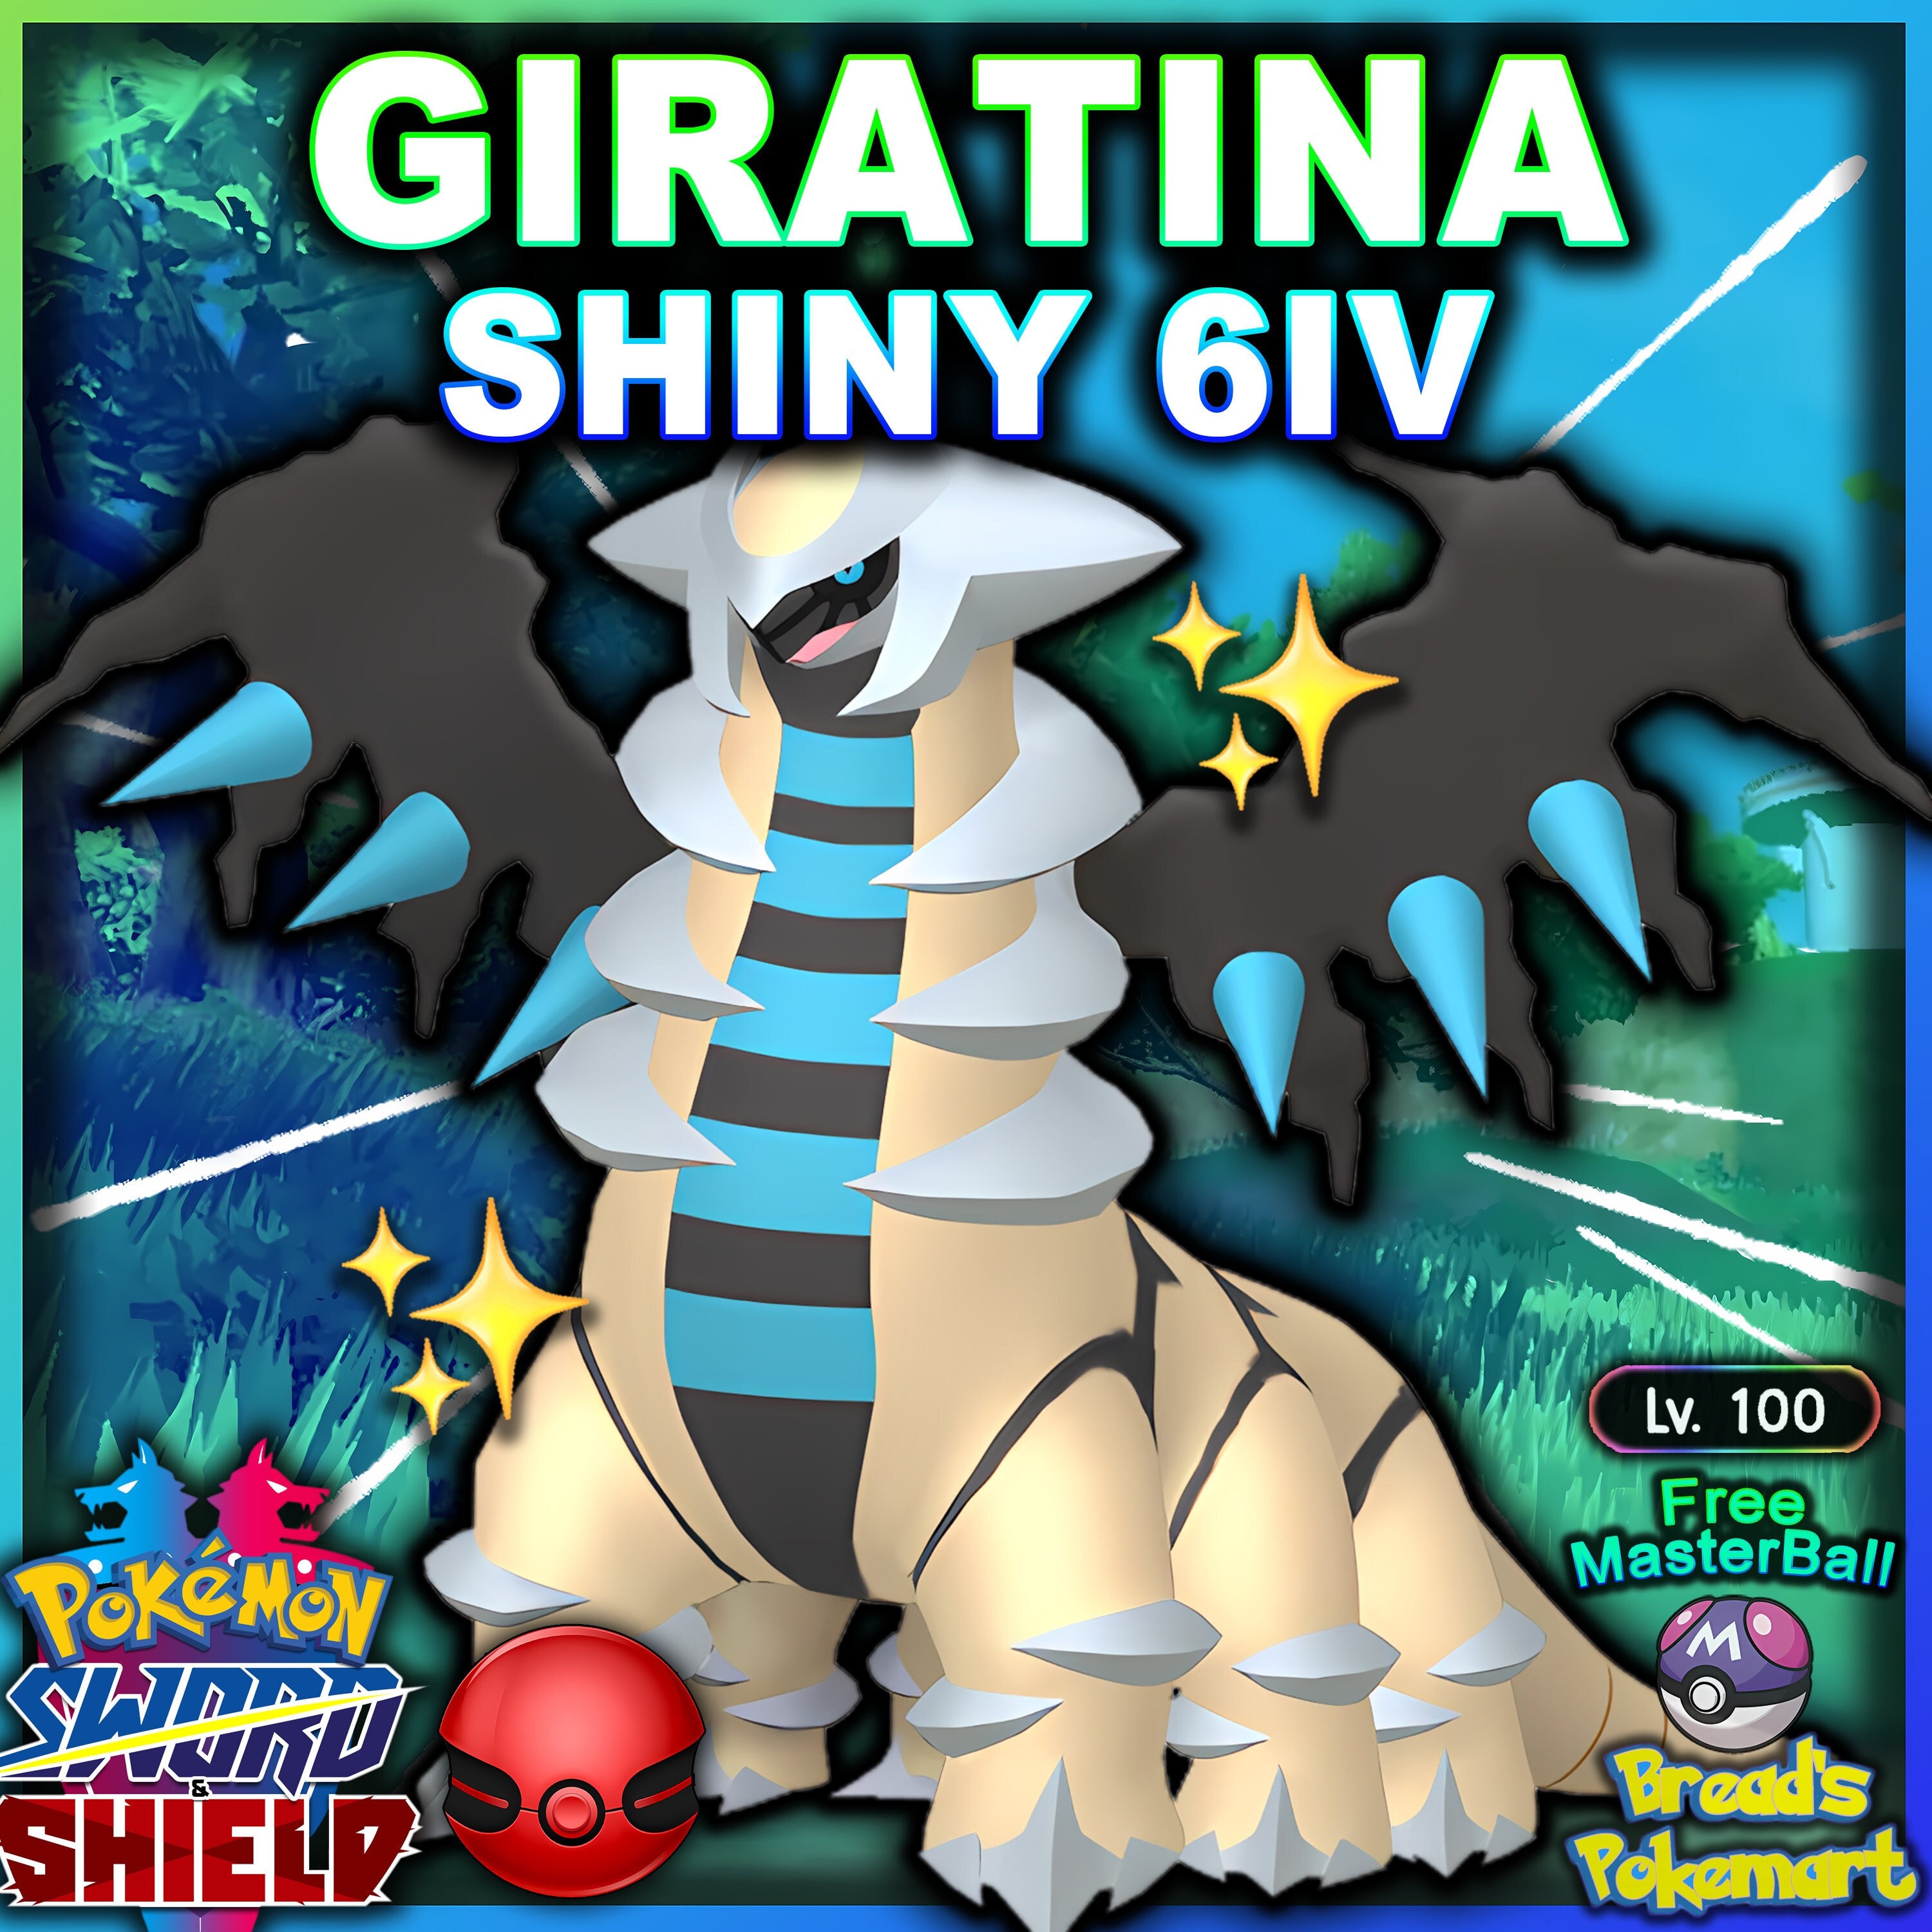 Shiny Giratina 6IV - Pokemon X/Y OR/AS S/M US/UM Sword/Shield